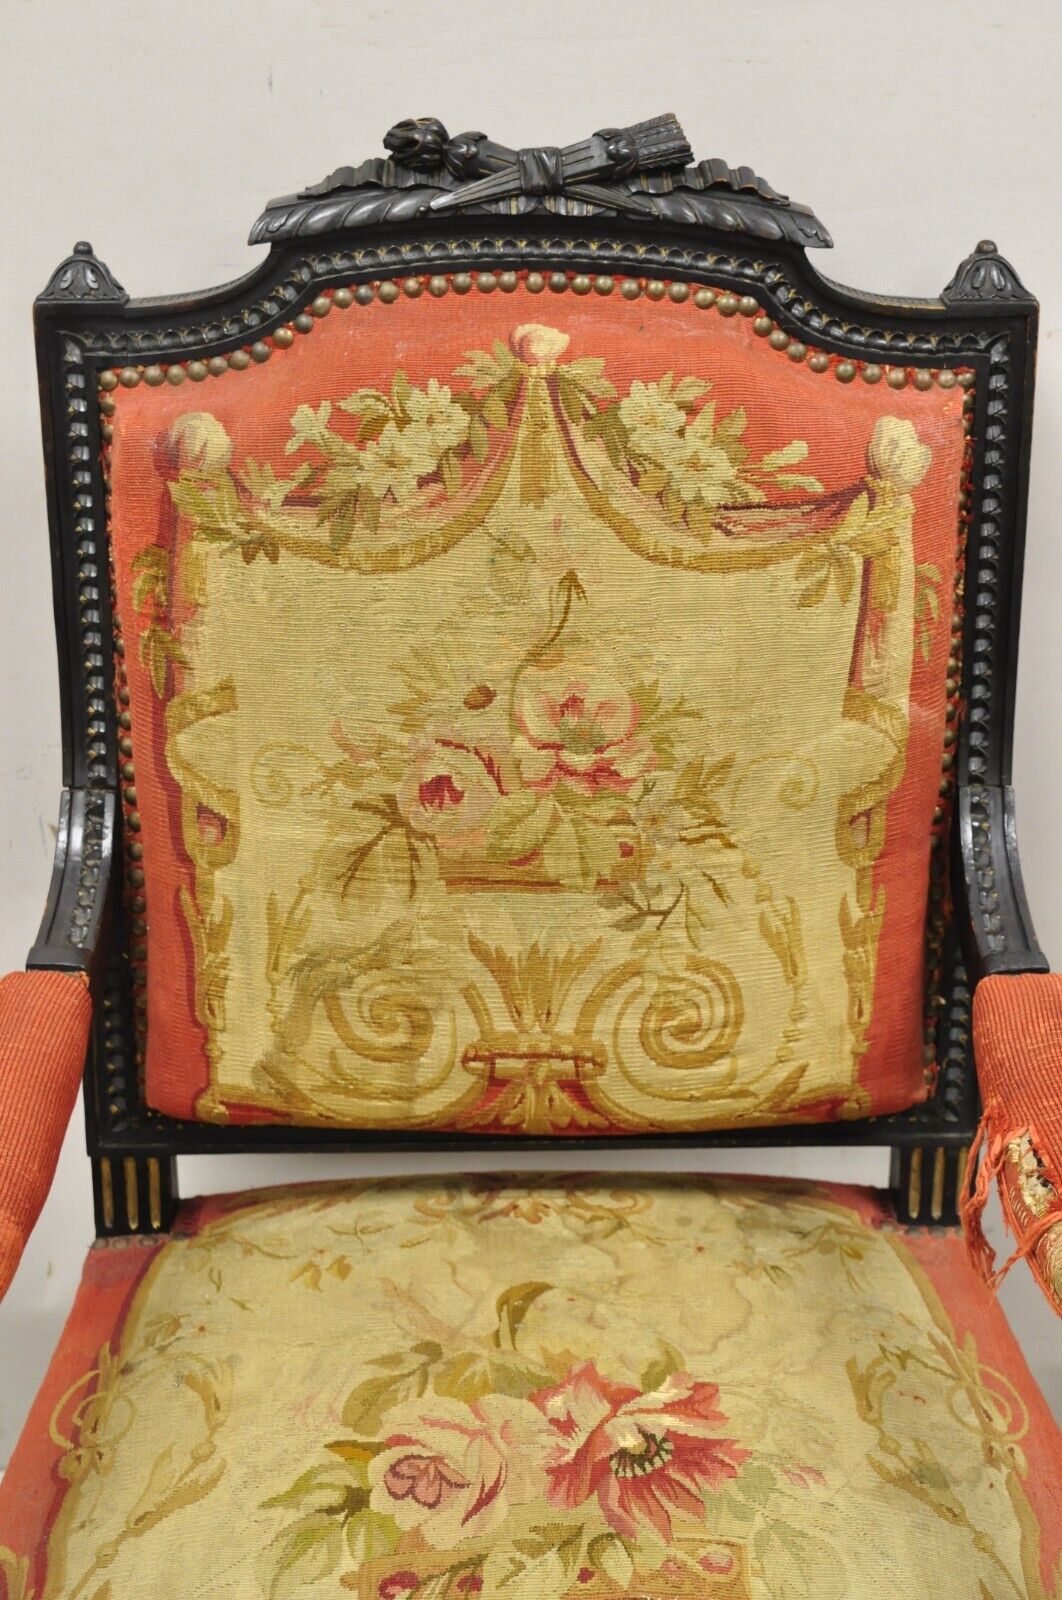 Antique French Empire Black Ebonized Walnut Needlepoint Parlor Arm Chair